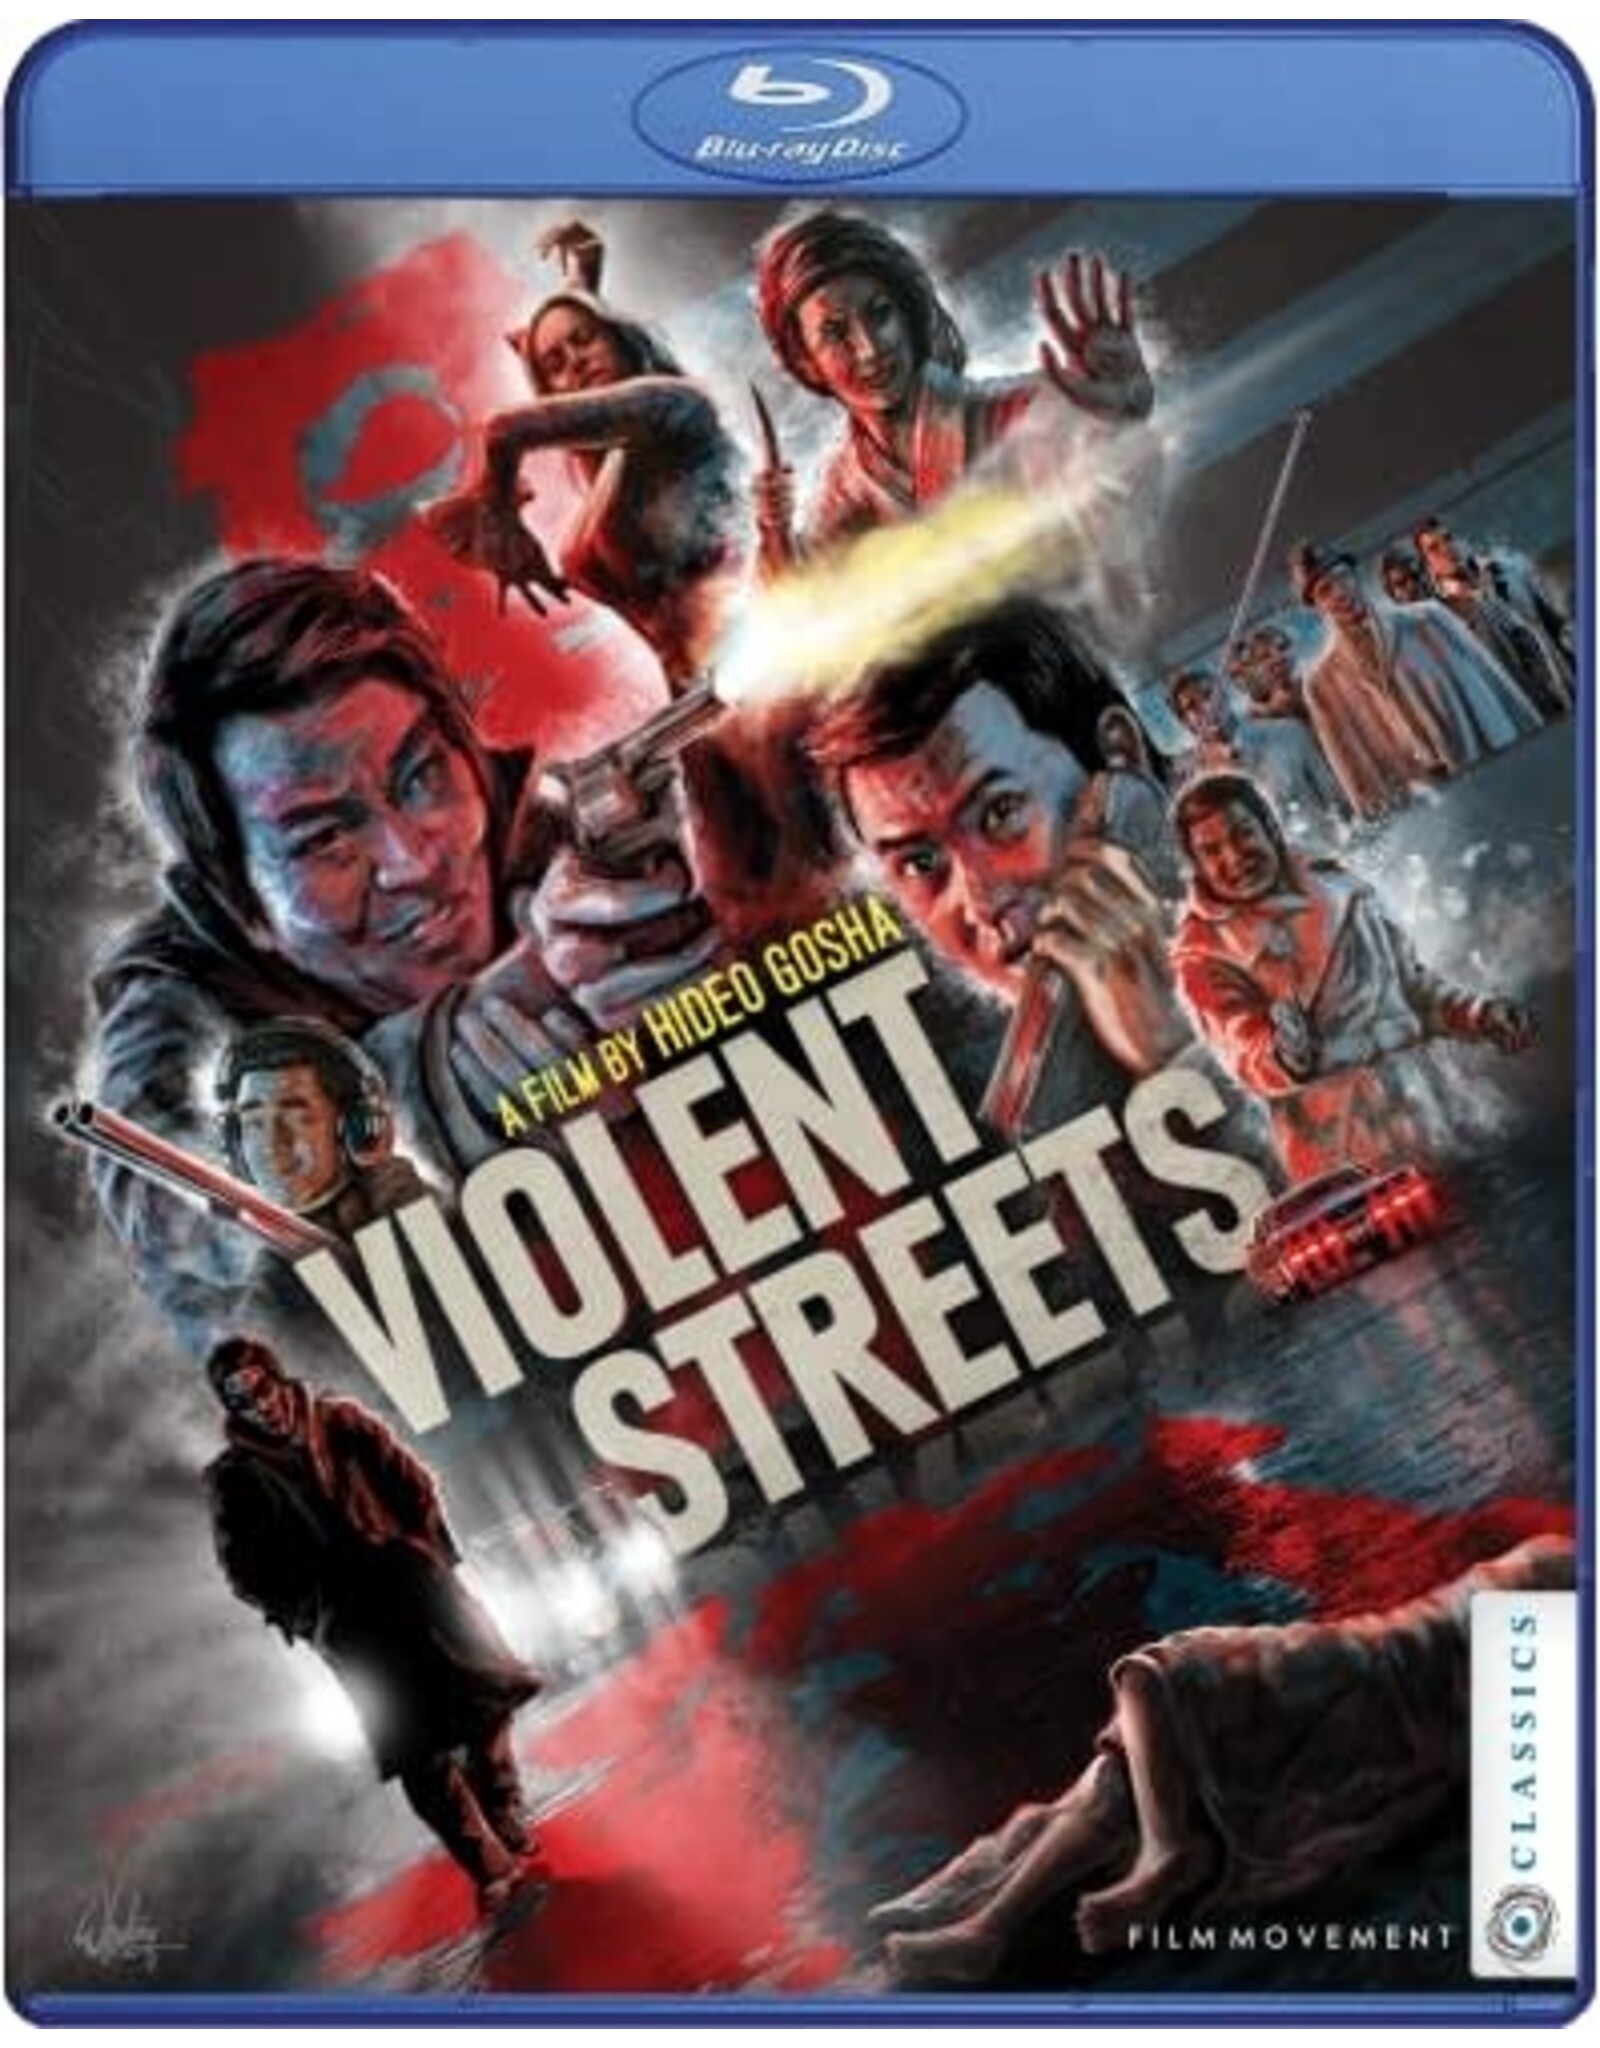 Cult & Cool Violent Streets (Brand New)